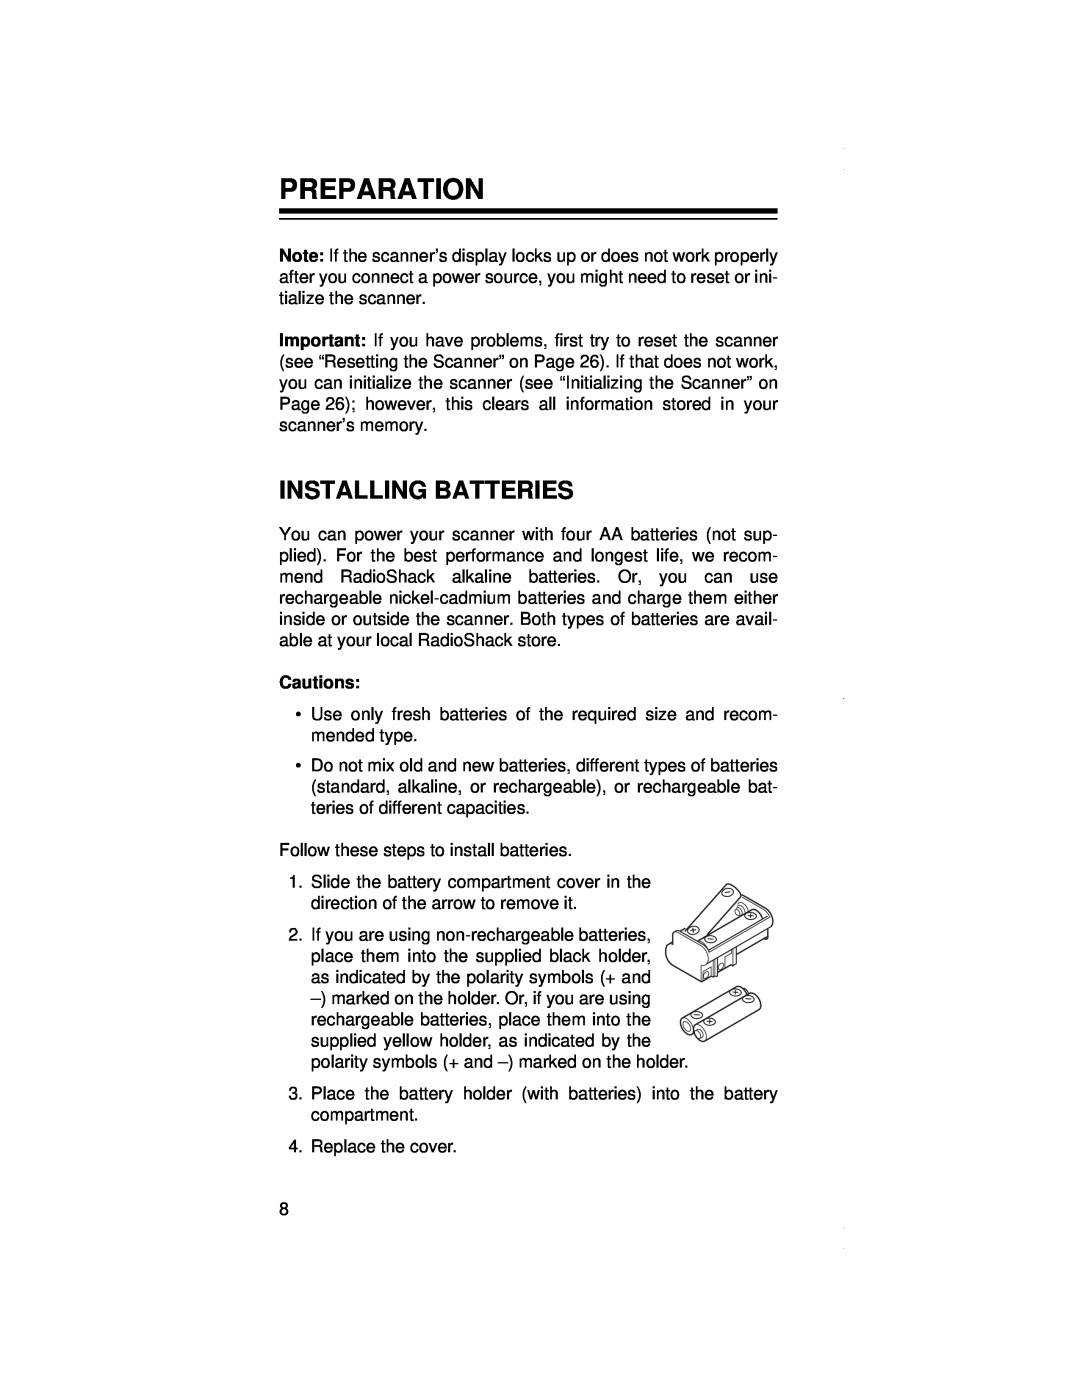 Radio Shack PRO-79 owner manual Preparation, Installing Batteries, Cautions 